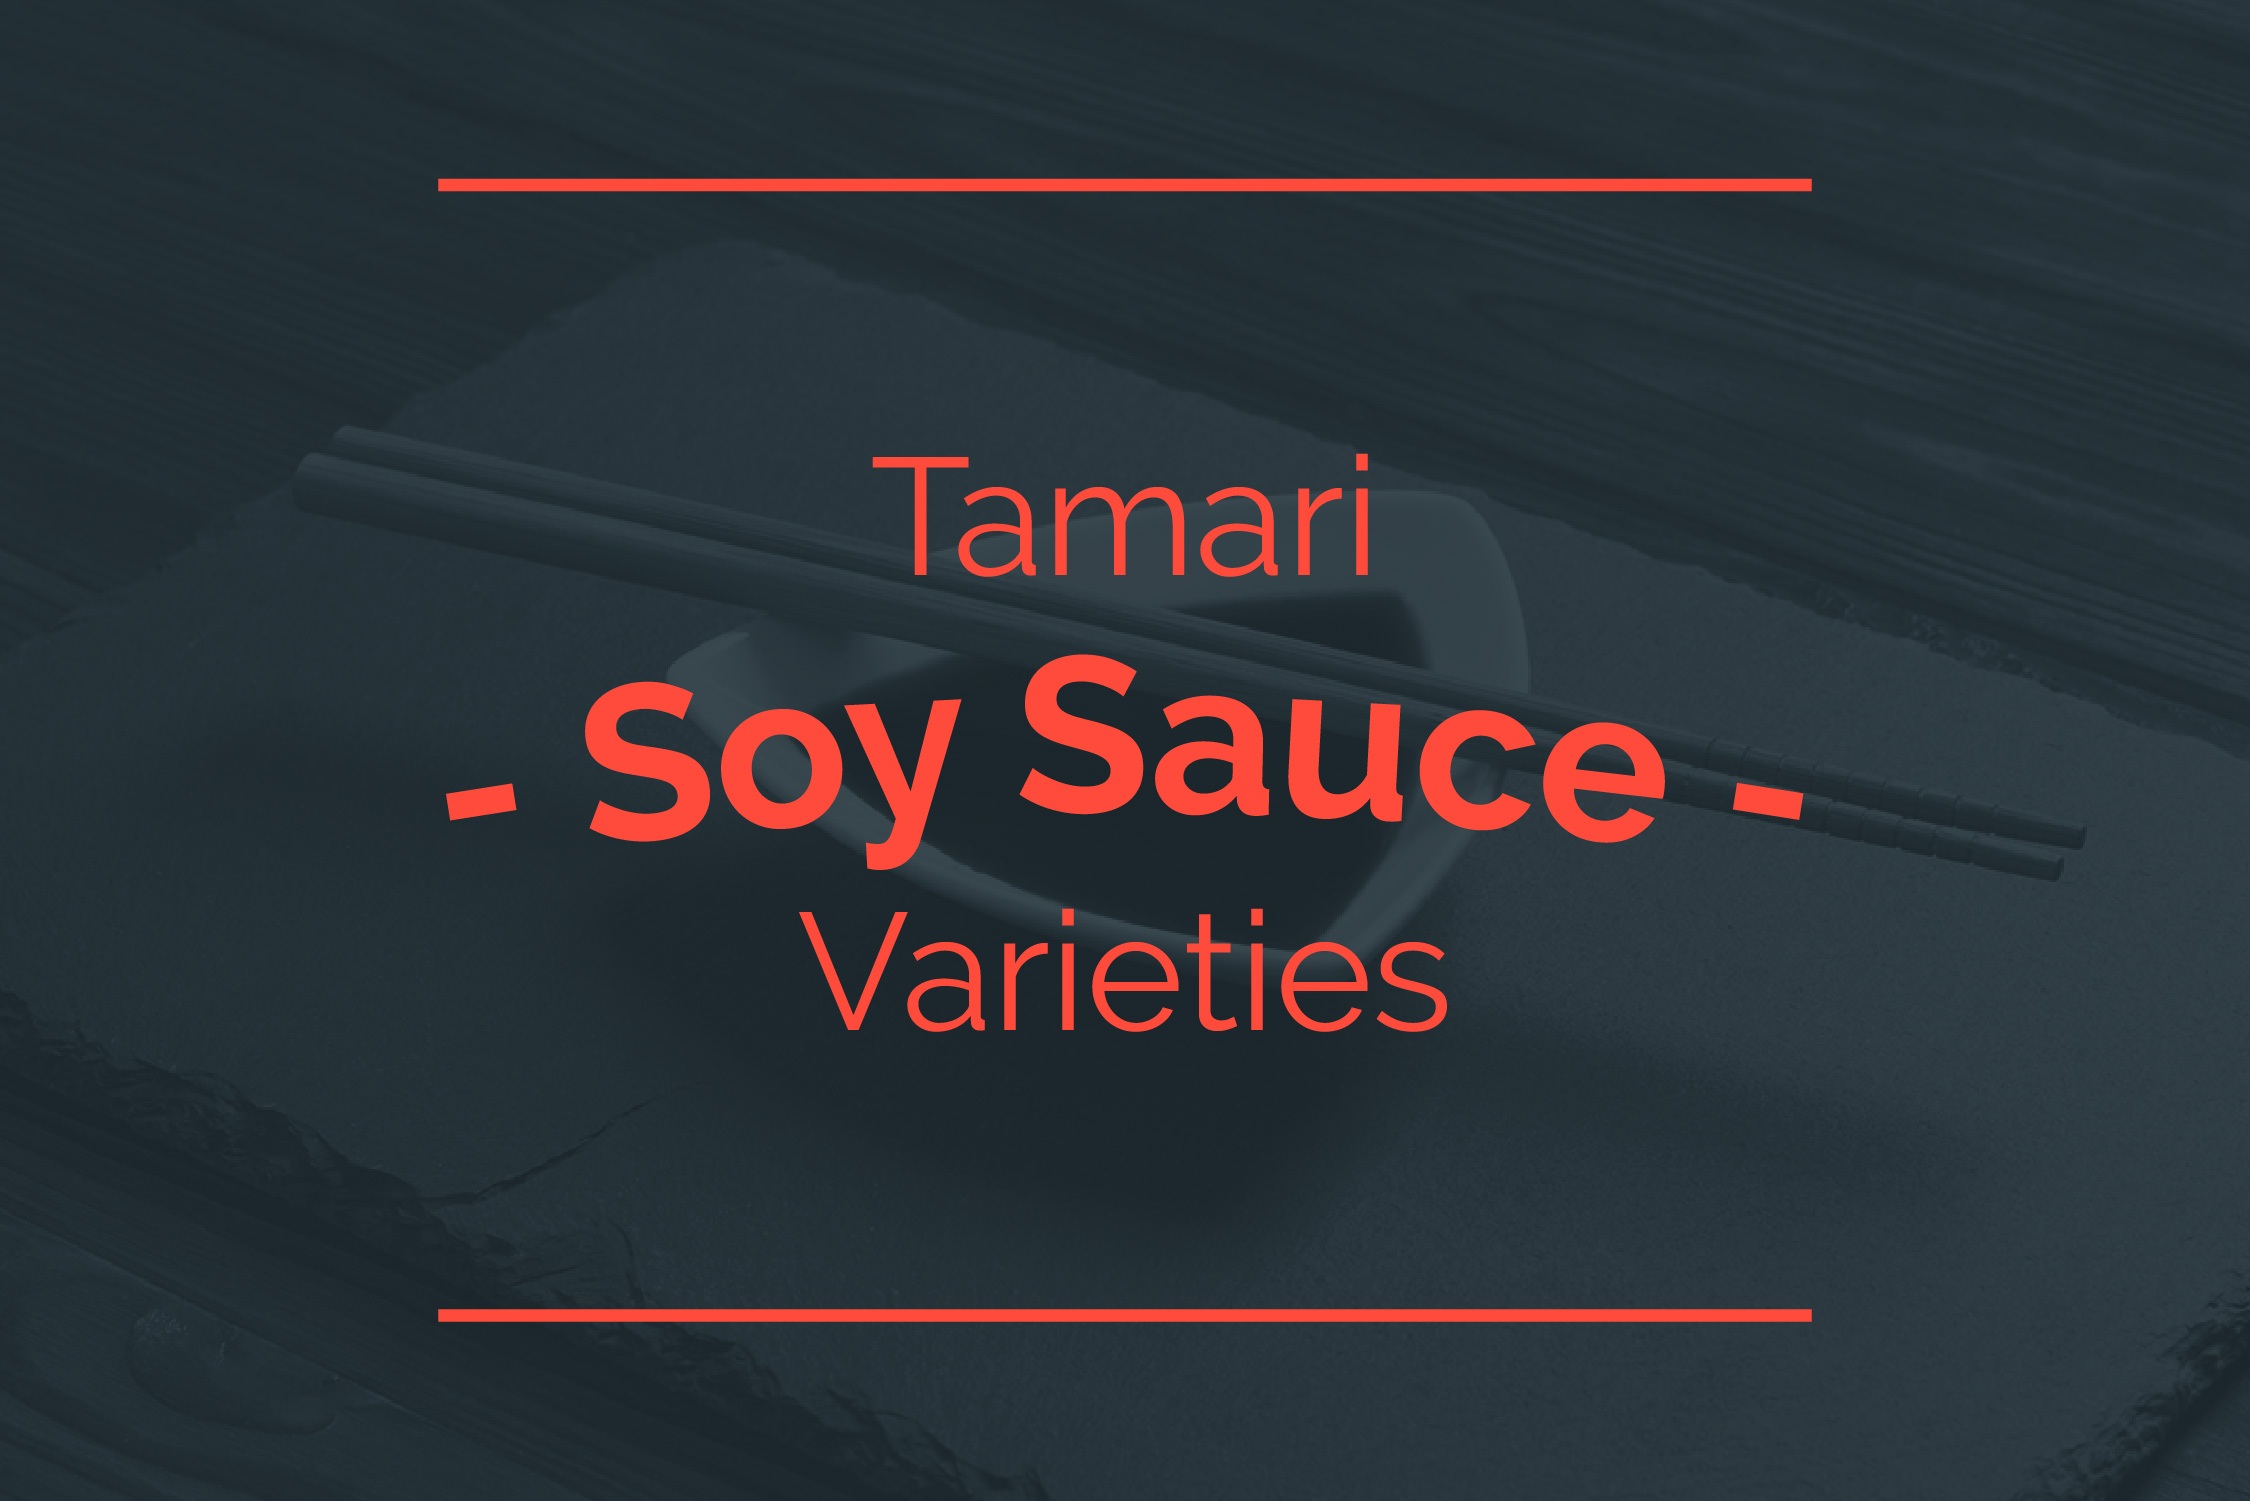 Feature tamari soy sauce varieties